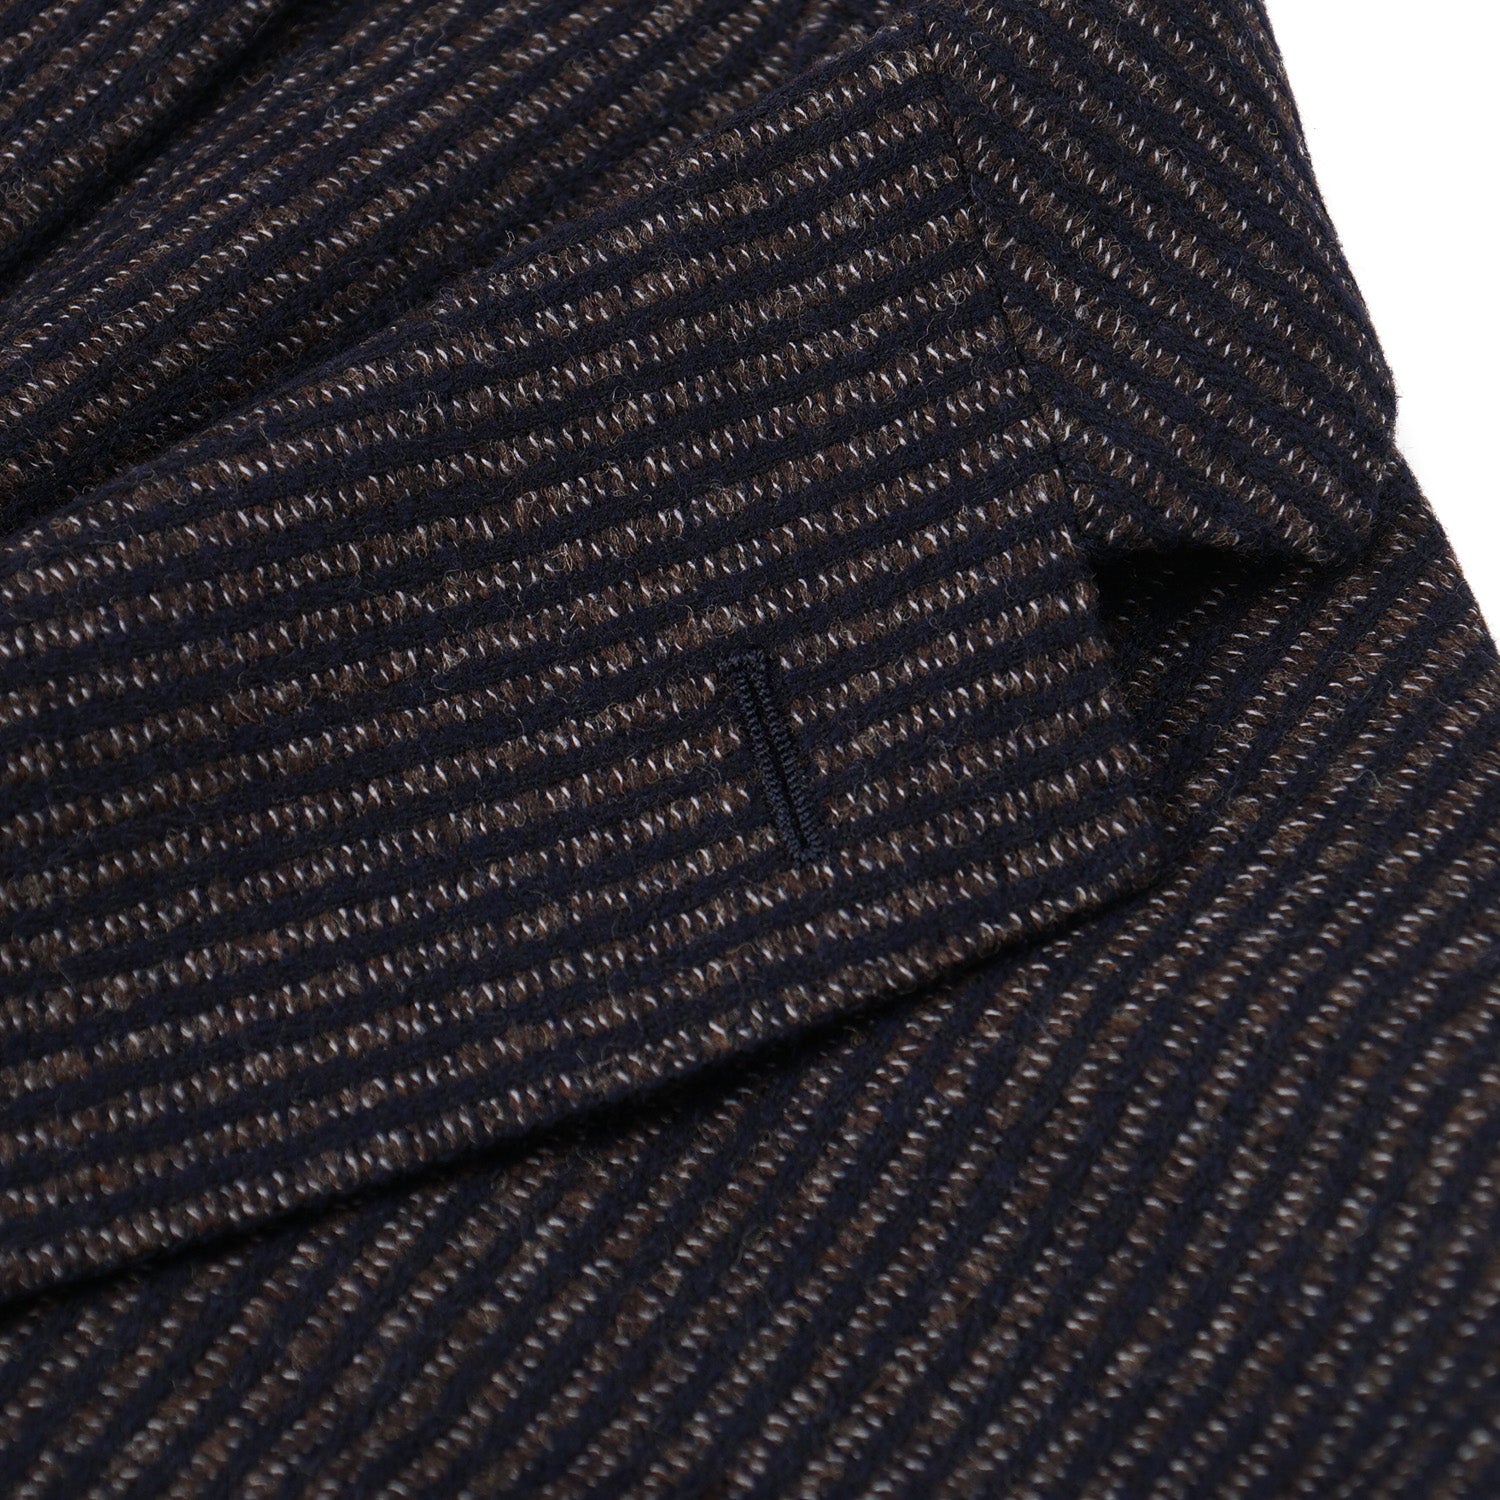 Boglioli Wool-Cashmere 'K Jacket' Sport Coat - Top Shelf Apparel